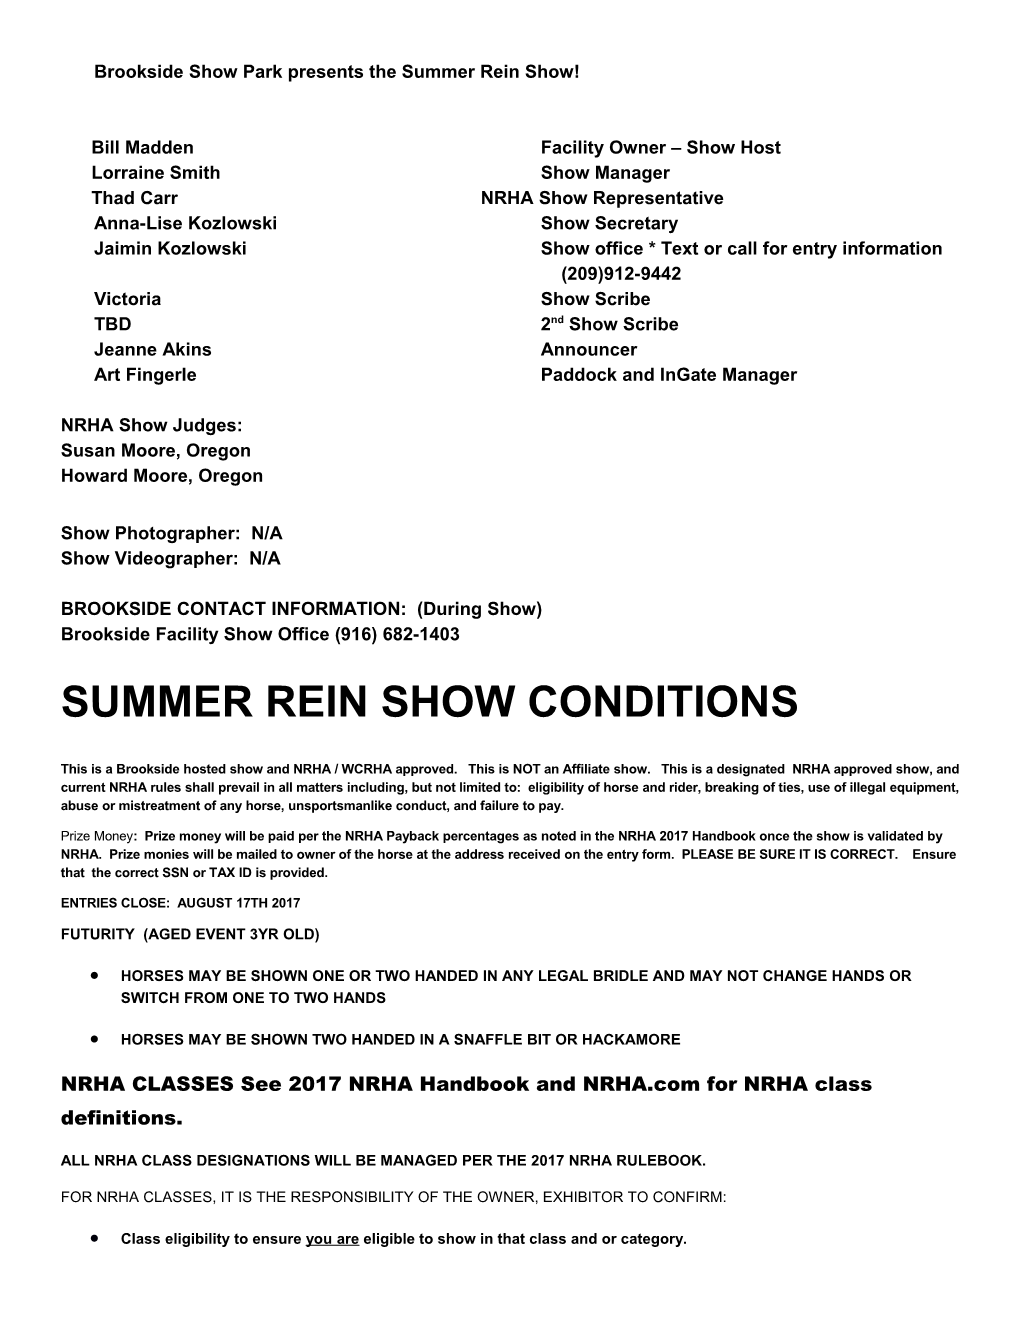 Brookside Show Park Presents the Summer Rein Show!